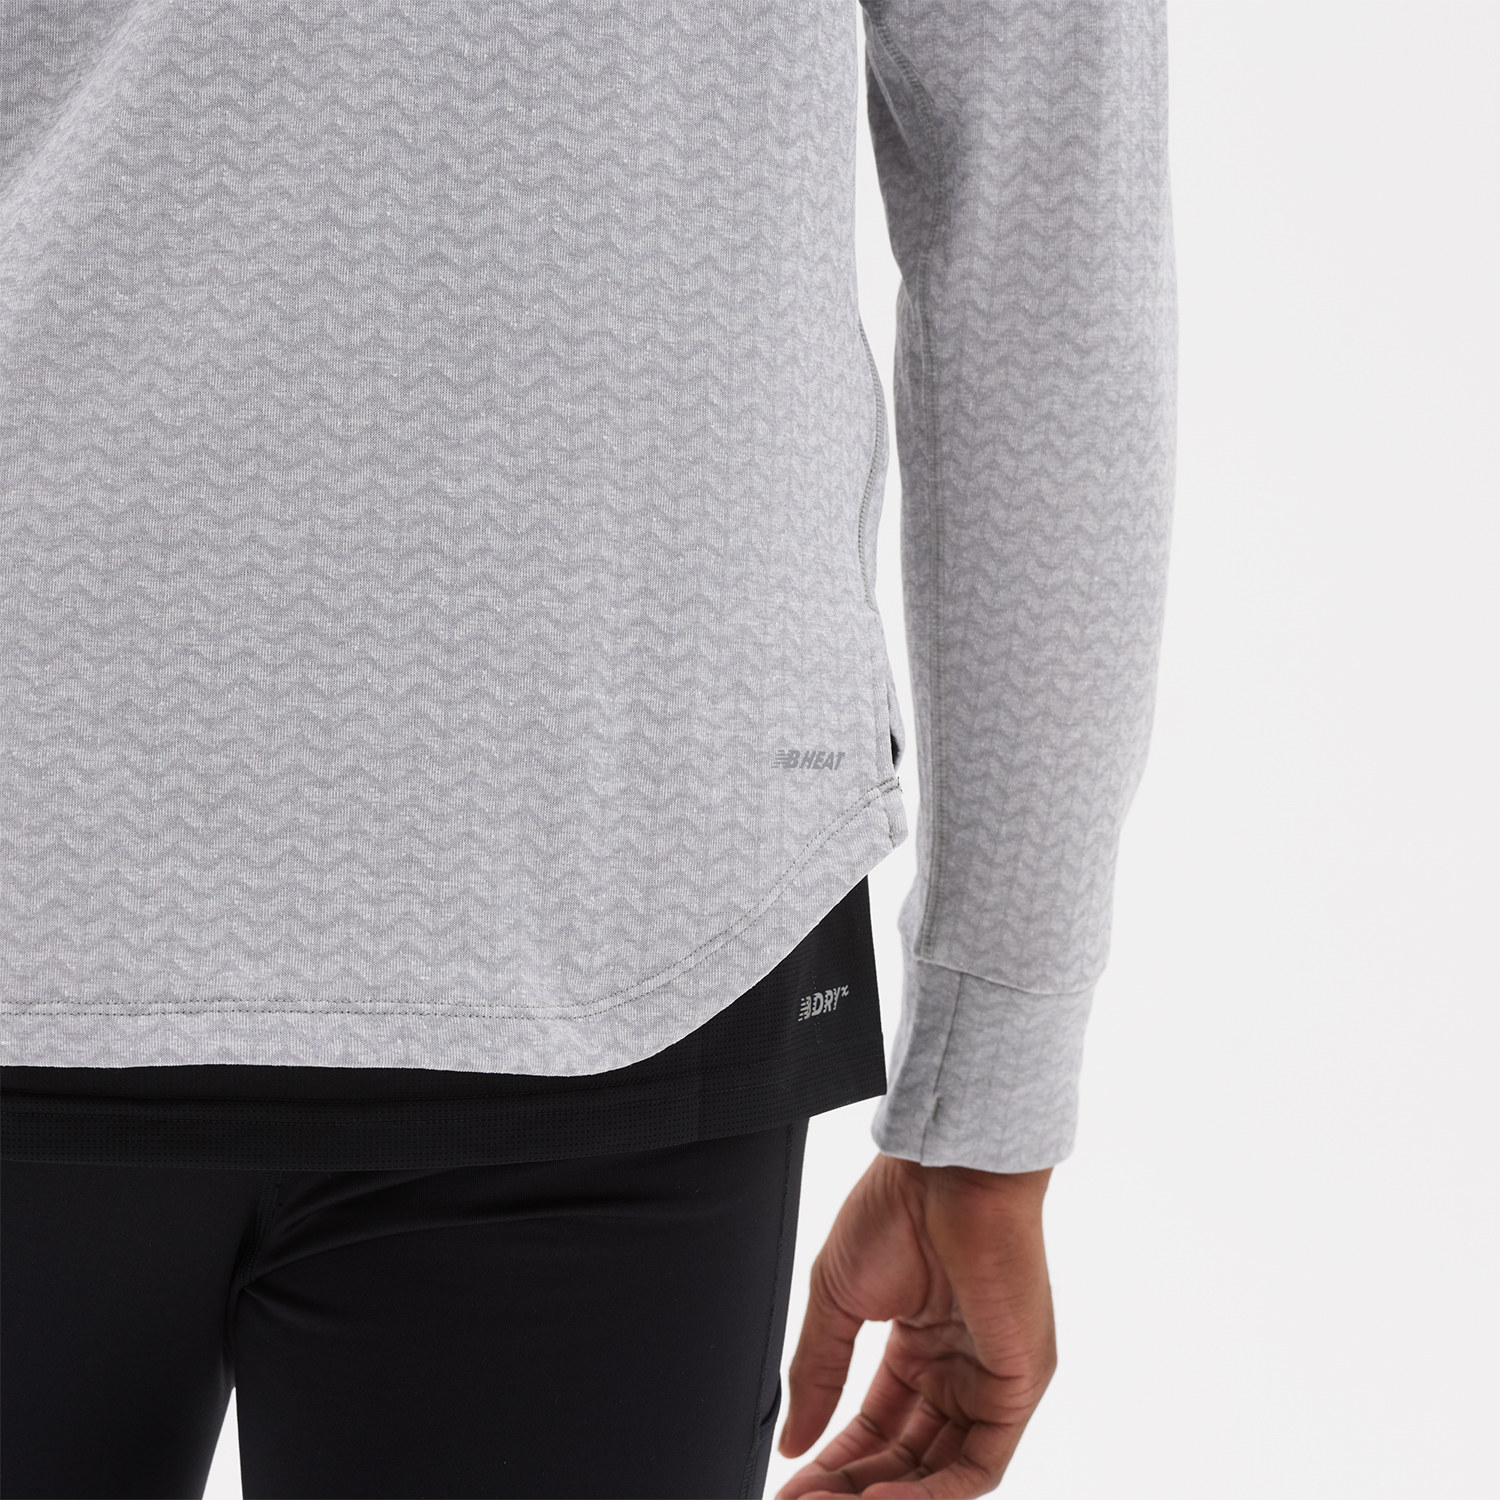 New Balance Heat Shirt - Athletic Grey